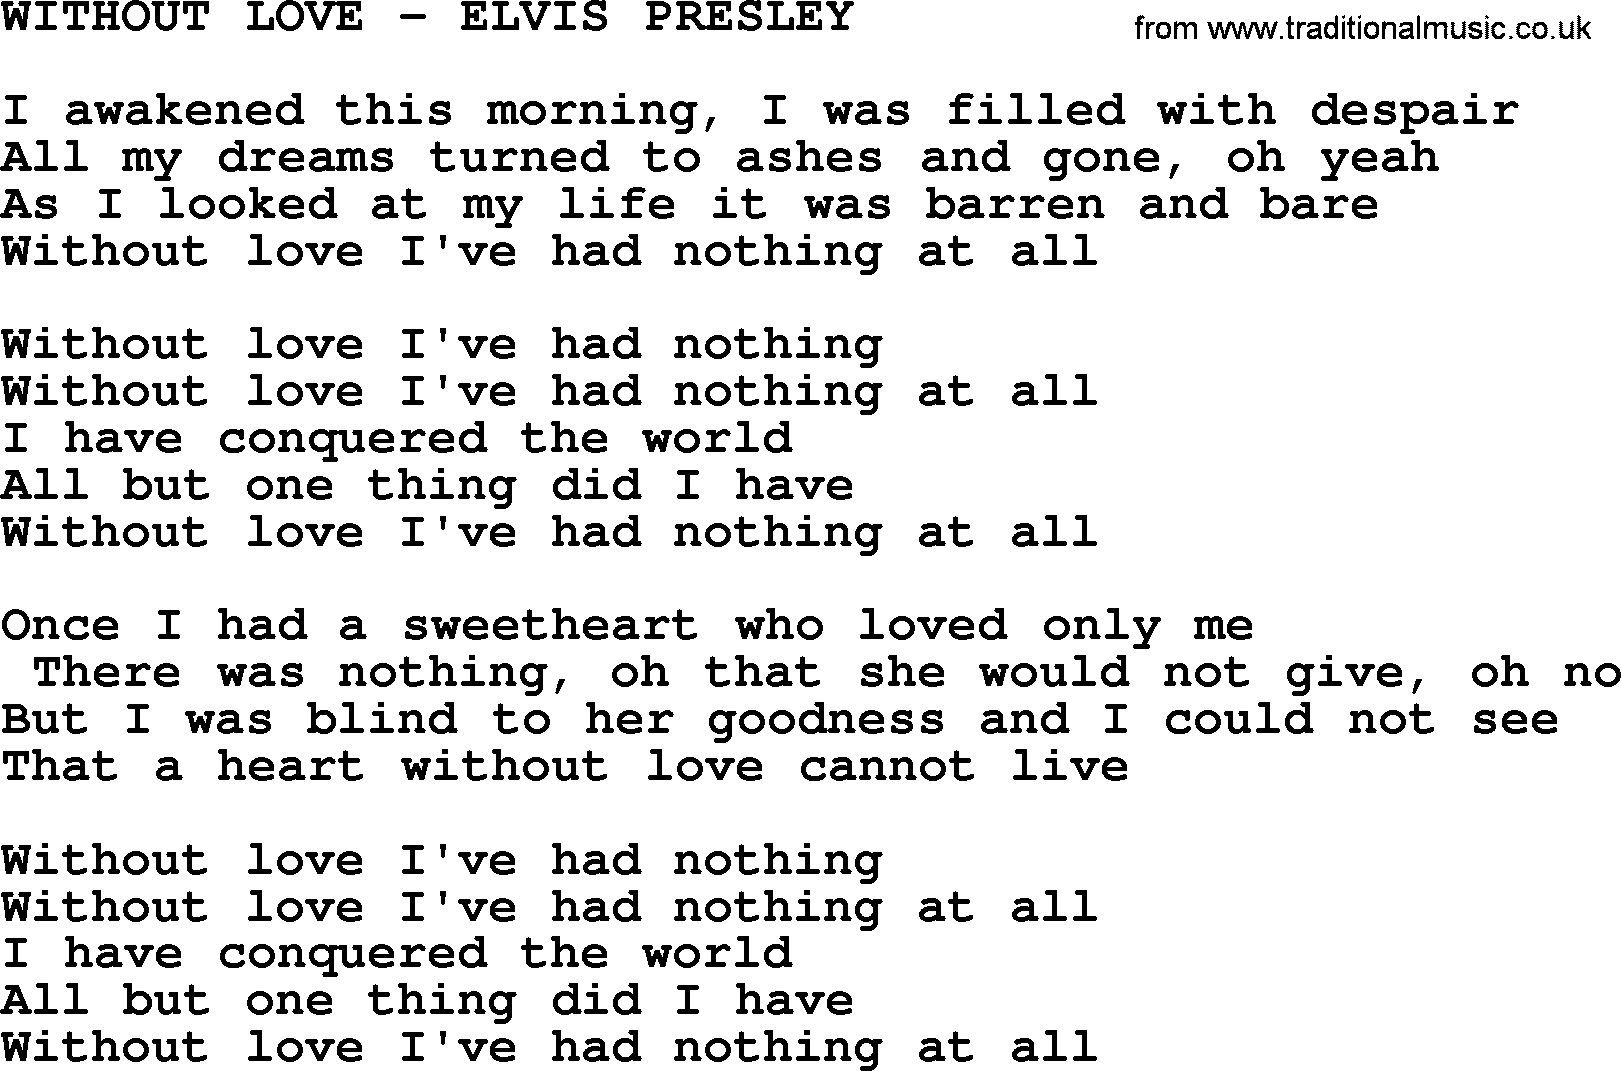 Elvis Presley song: Without Love-Elvis Presley-.txt lyrics and chords